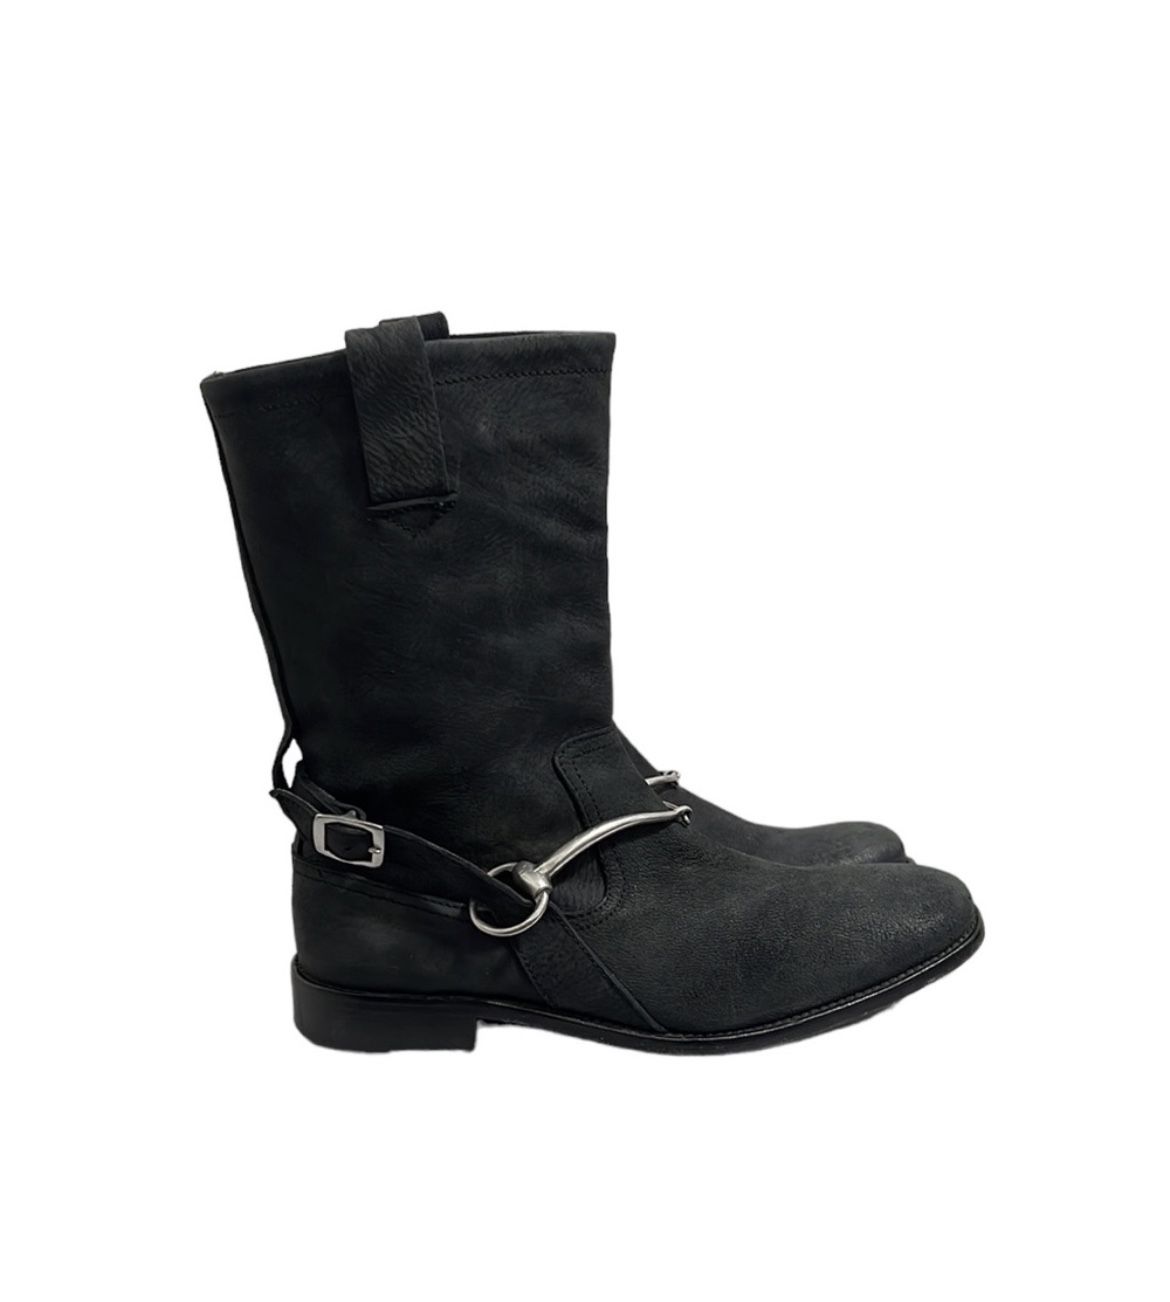 John Varvatos Horsebit Boots Size 8.5 for Sale in North Las Vegas, NV ...